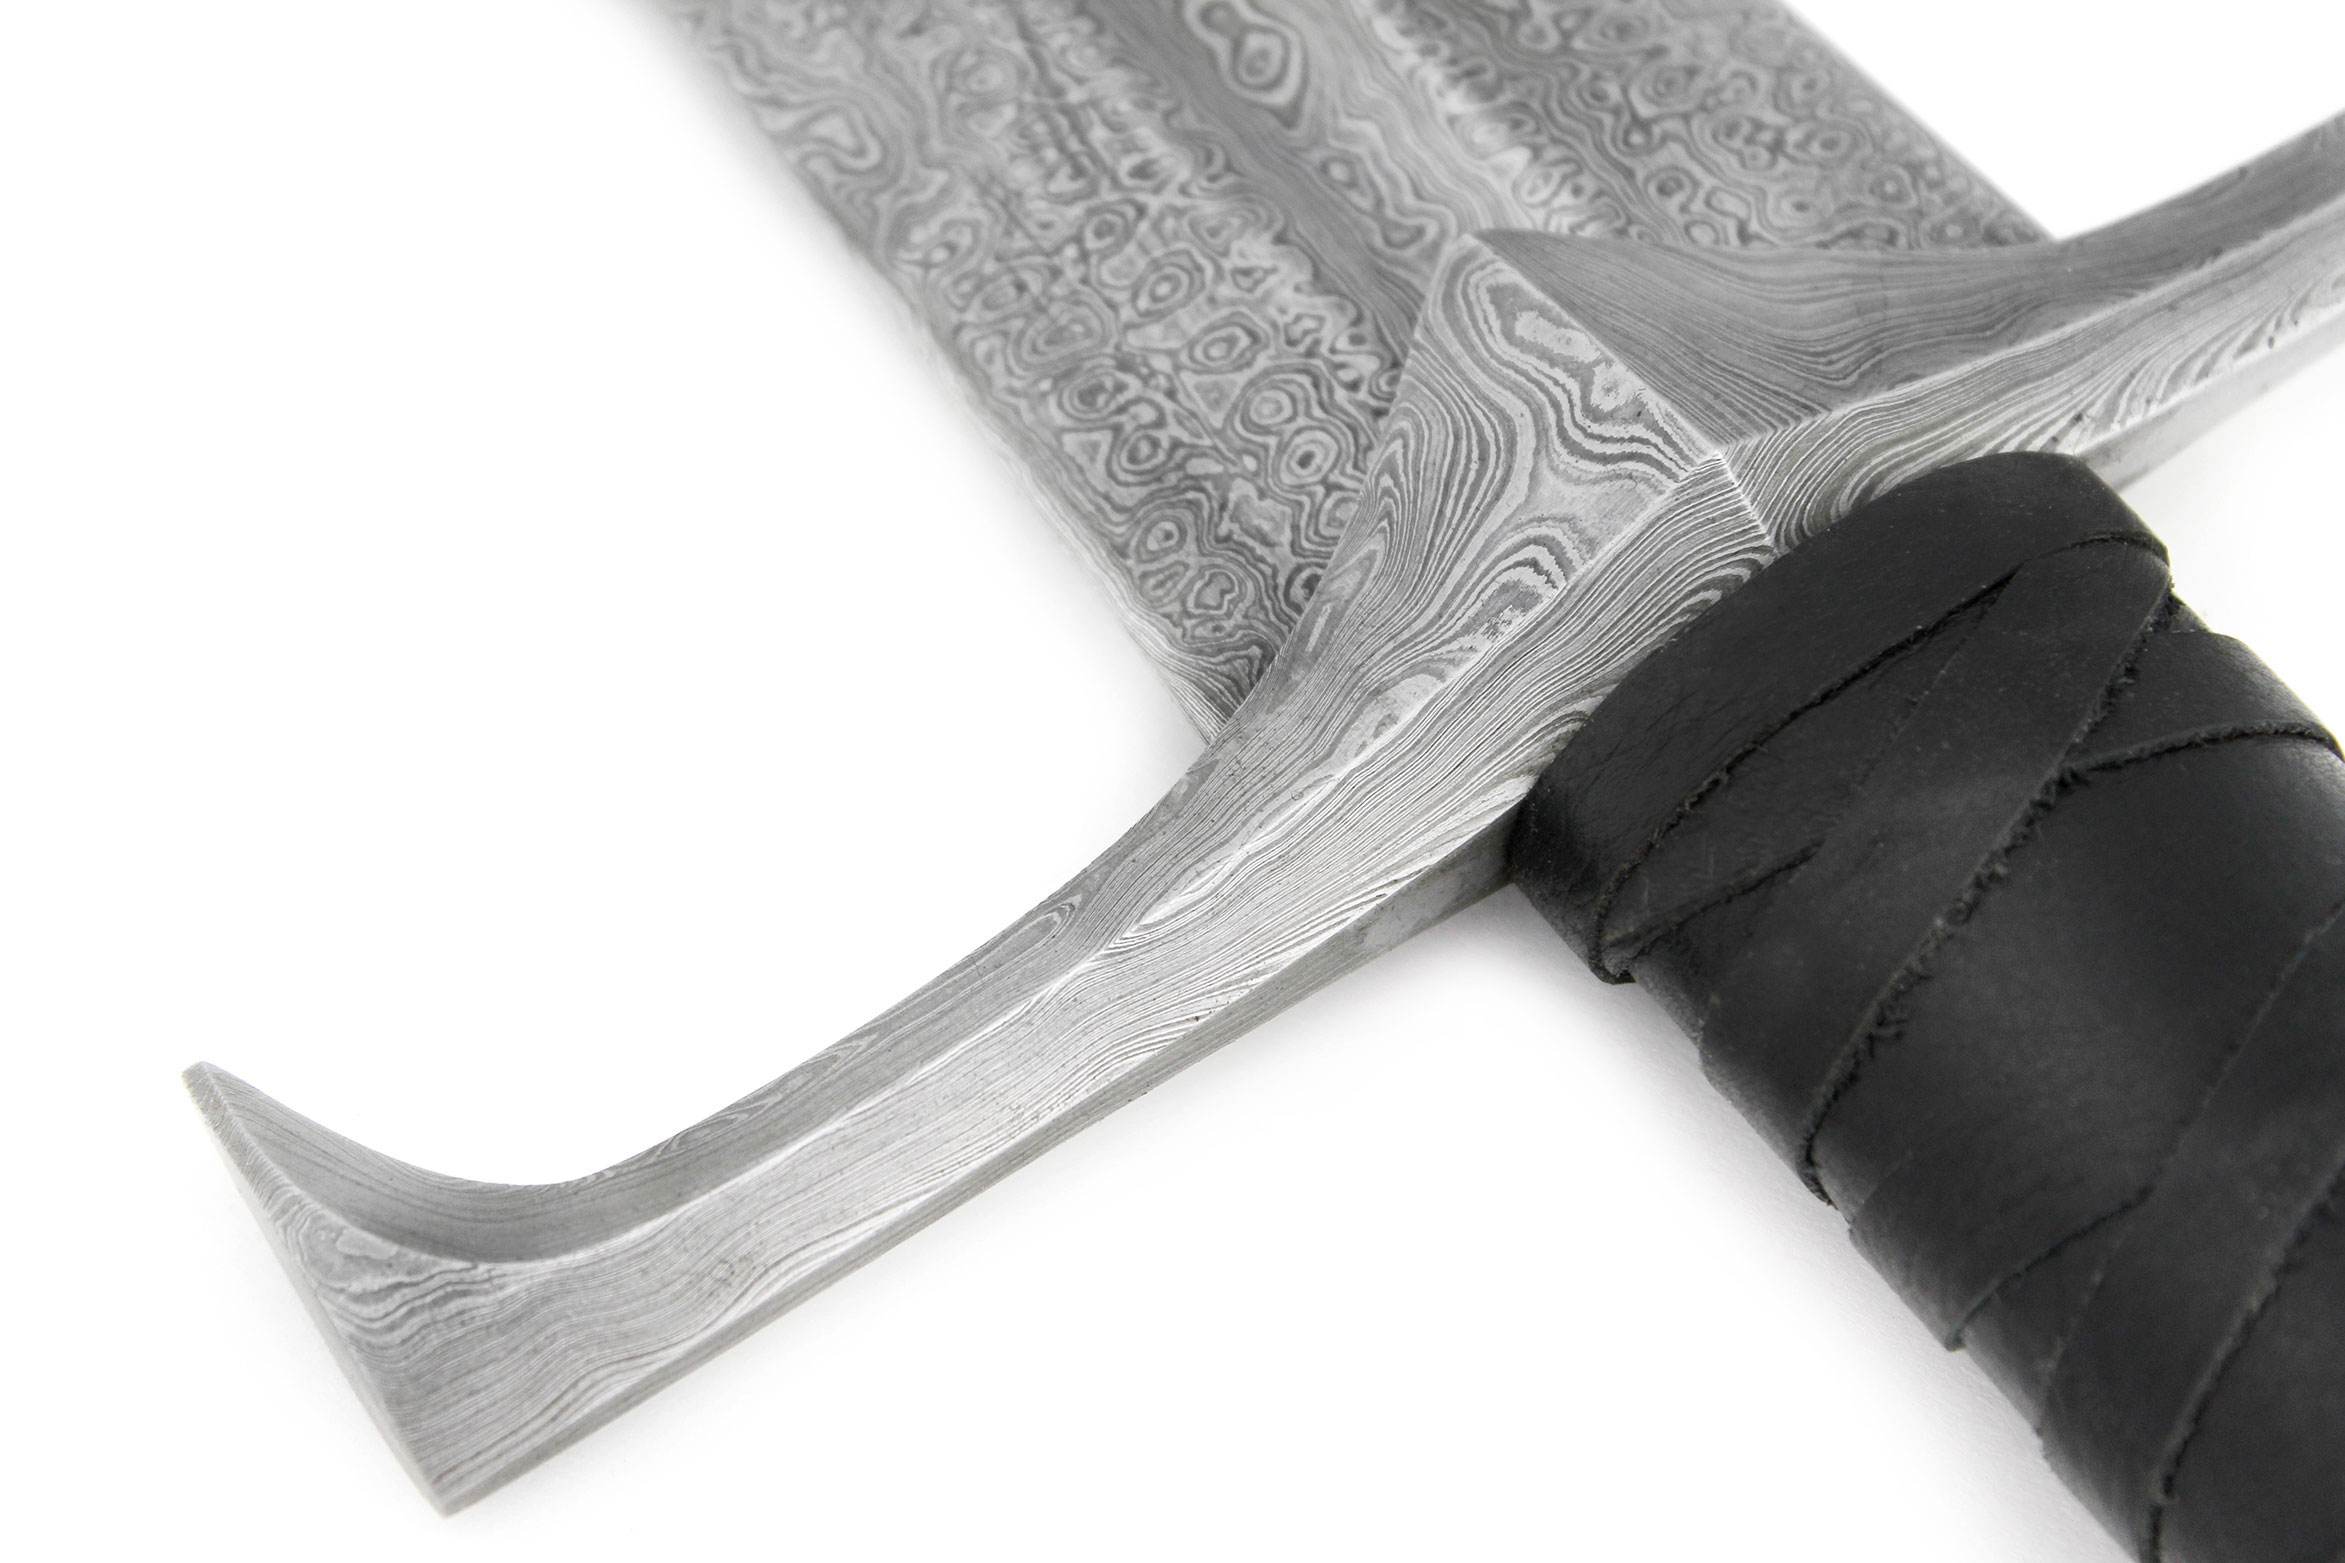 https://www.darksword-armory.com/wp-content/uploads/2016/05/the-viscount-elite-series-damascus-steel-medieval-sword-2.jpg